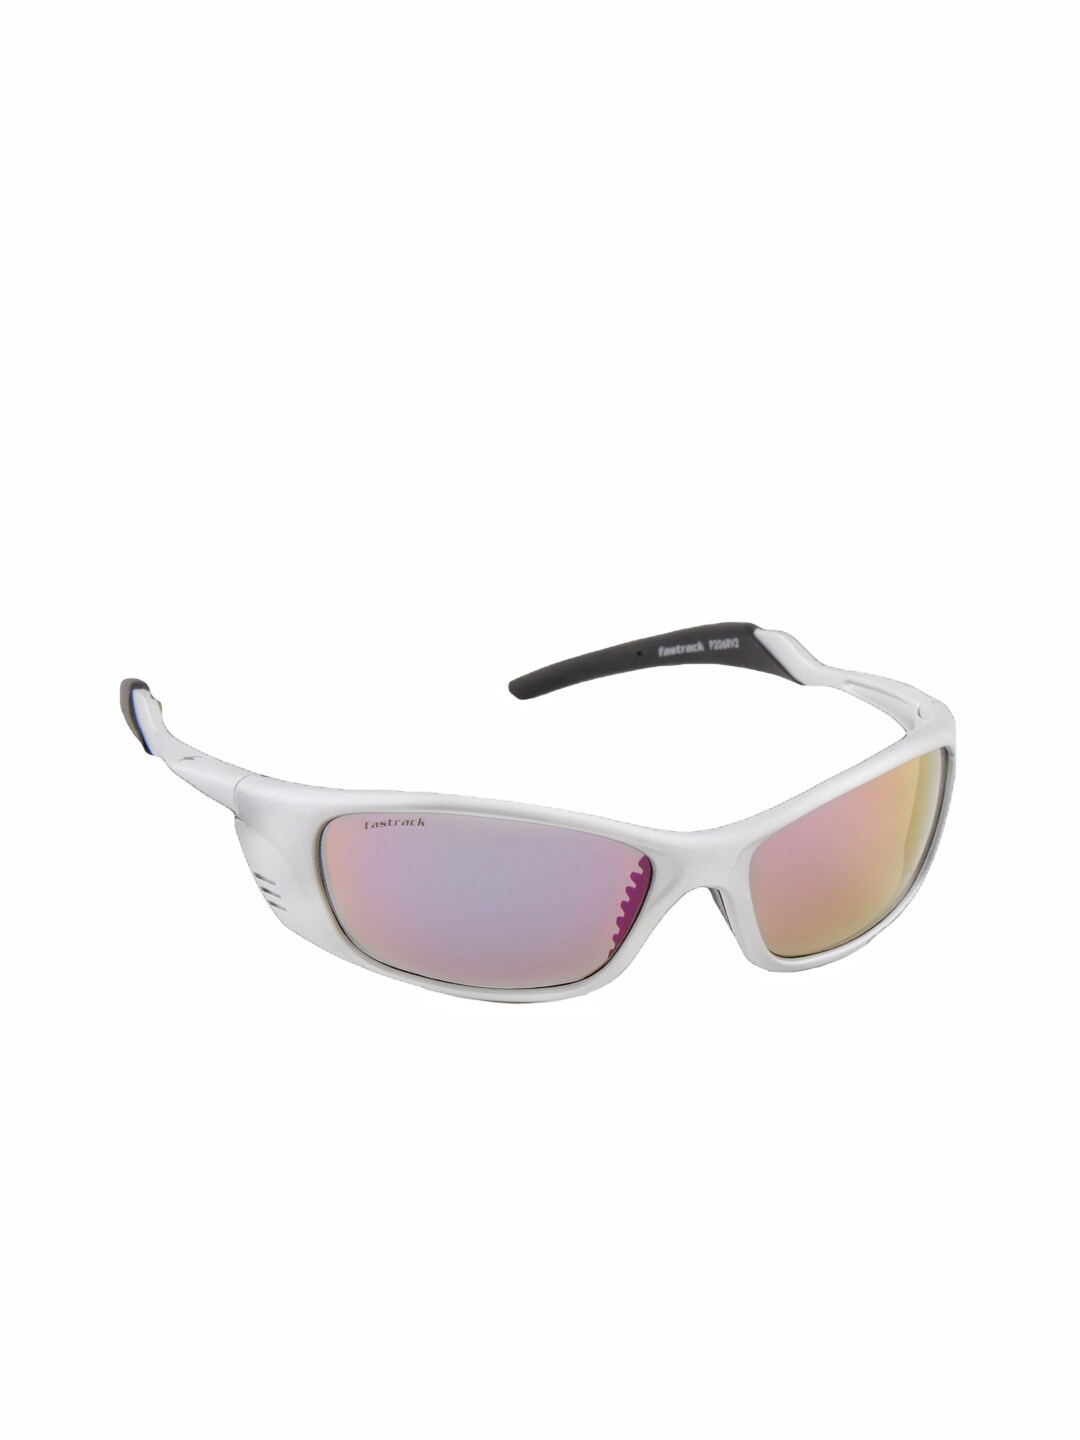 Fastrack Men Revo Coated Sporty Wrap Sunglasses